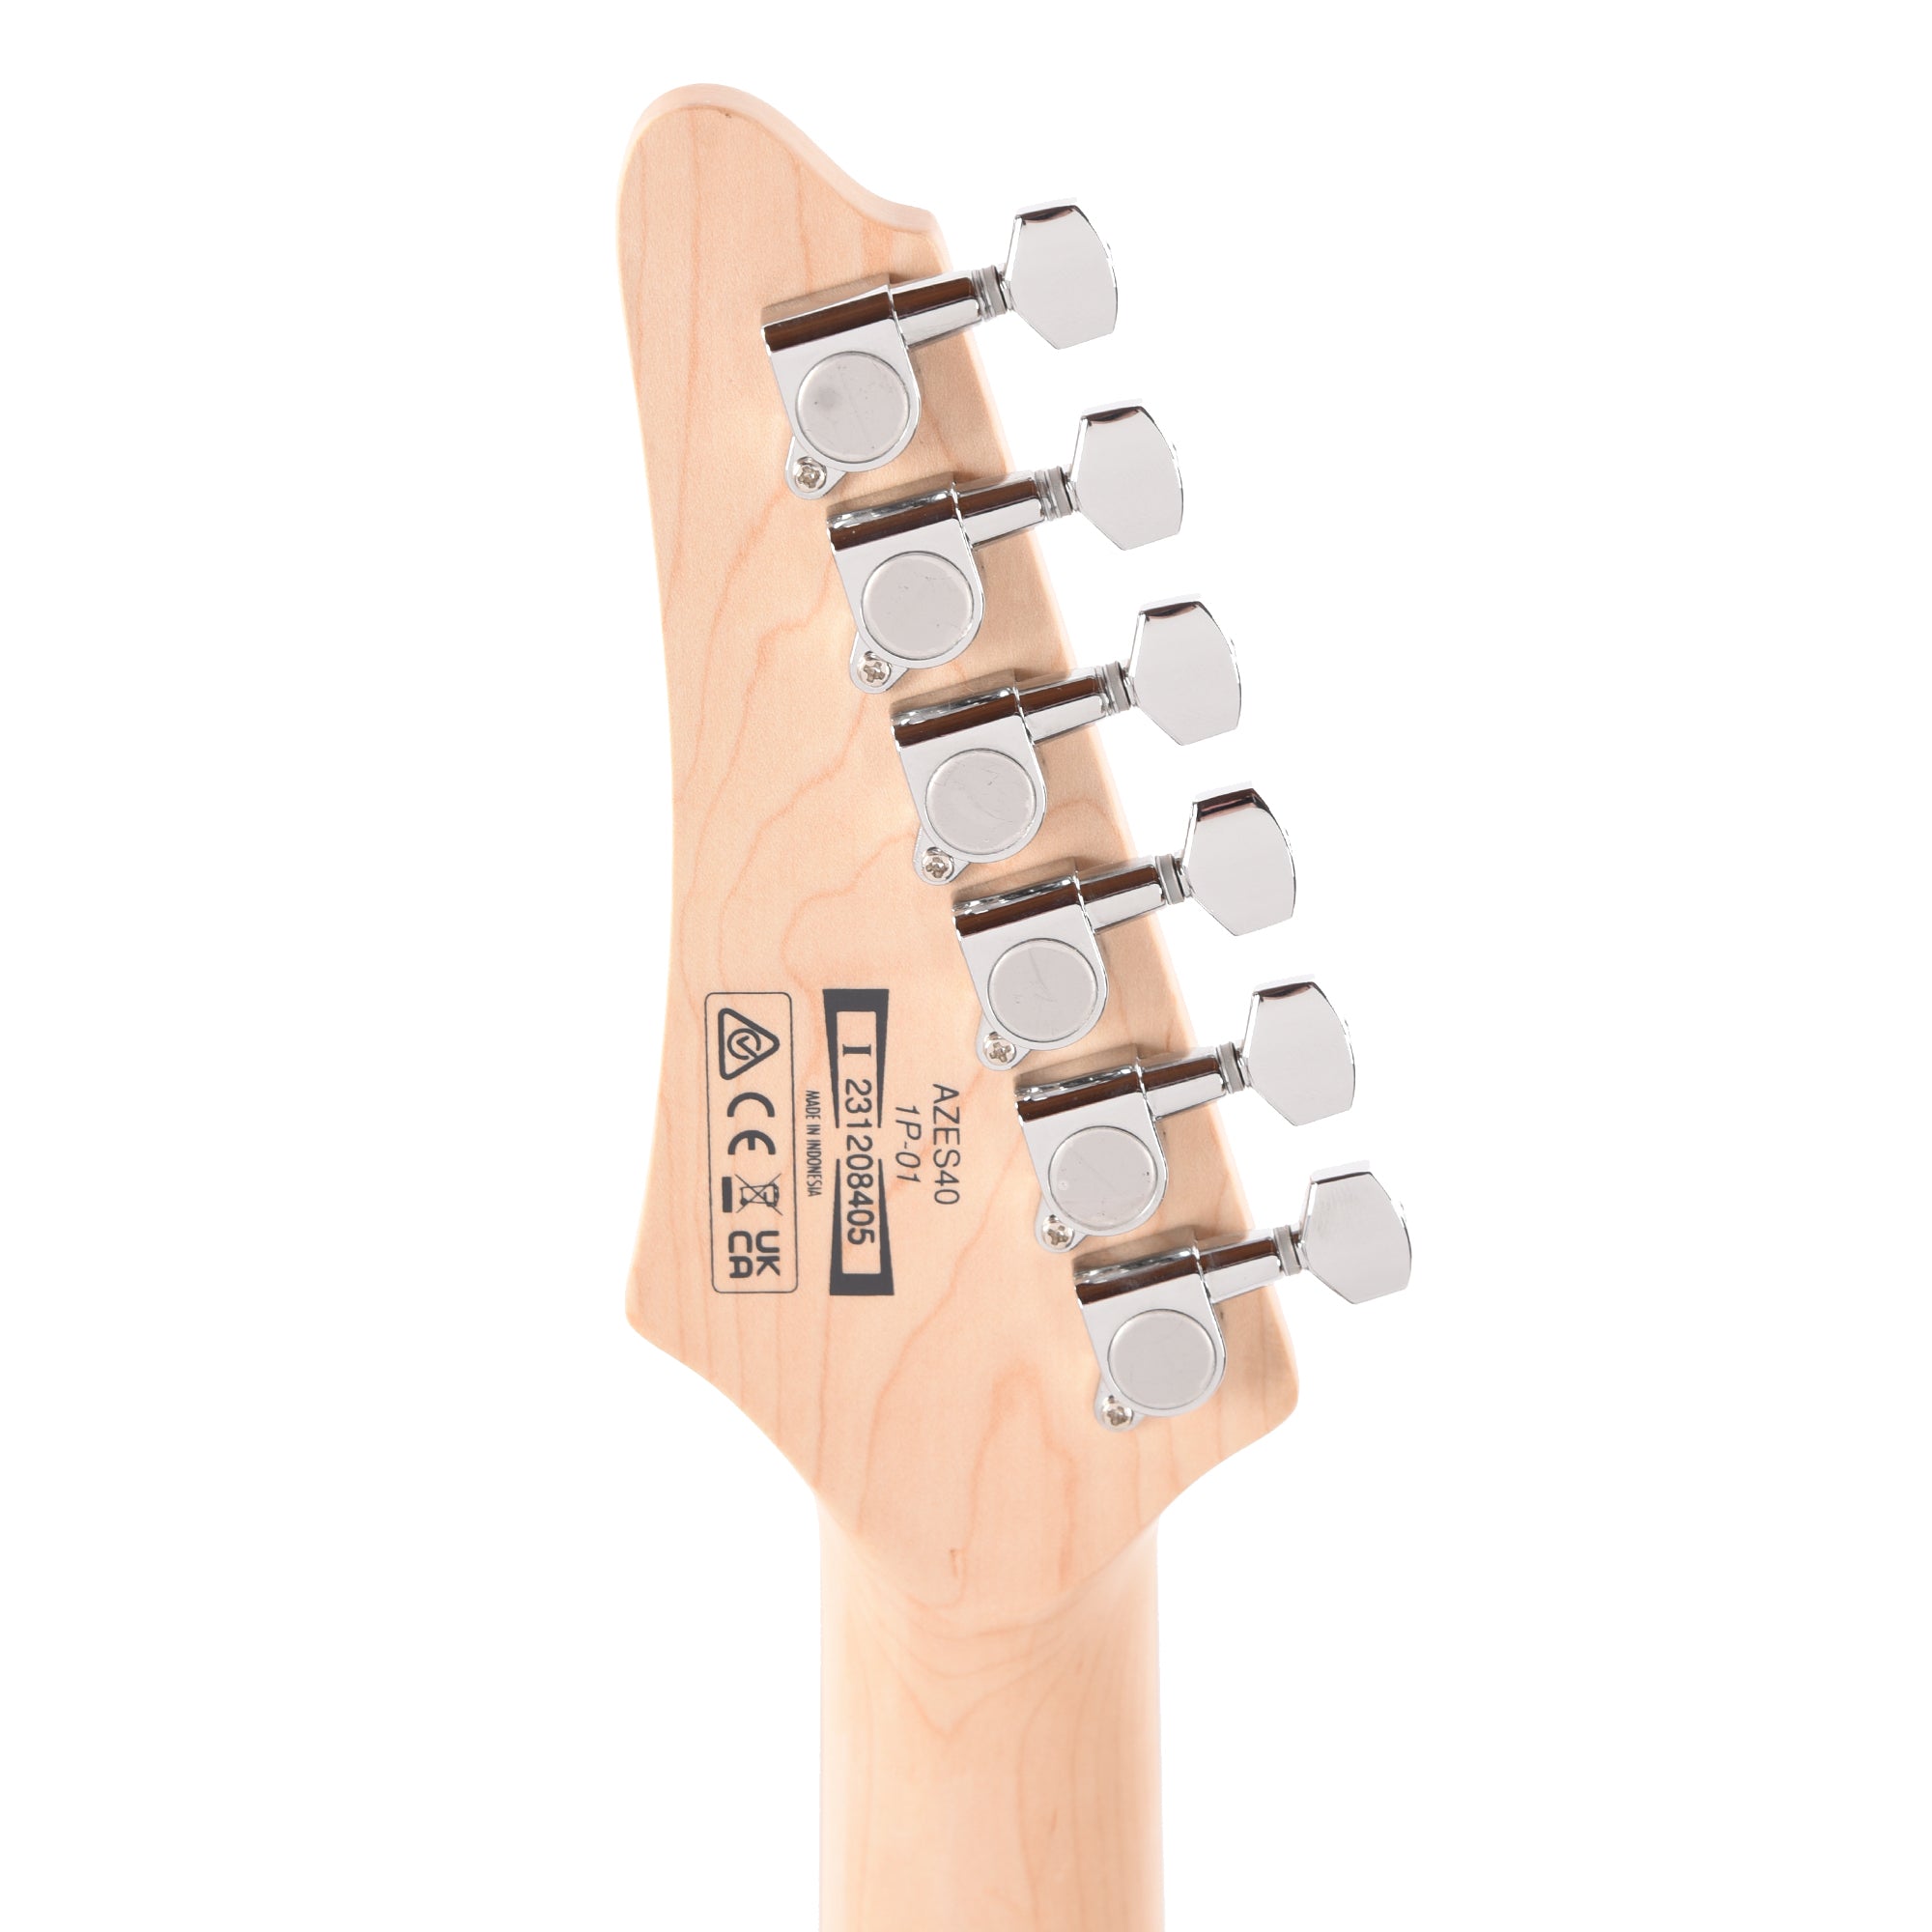 Ibanez AZES40TUN Standard 6-String Electric Guitar Tungsten